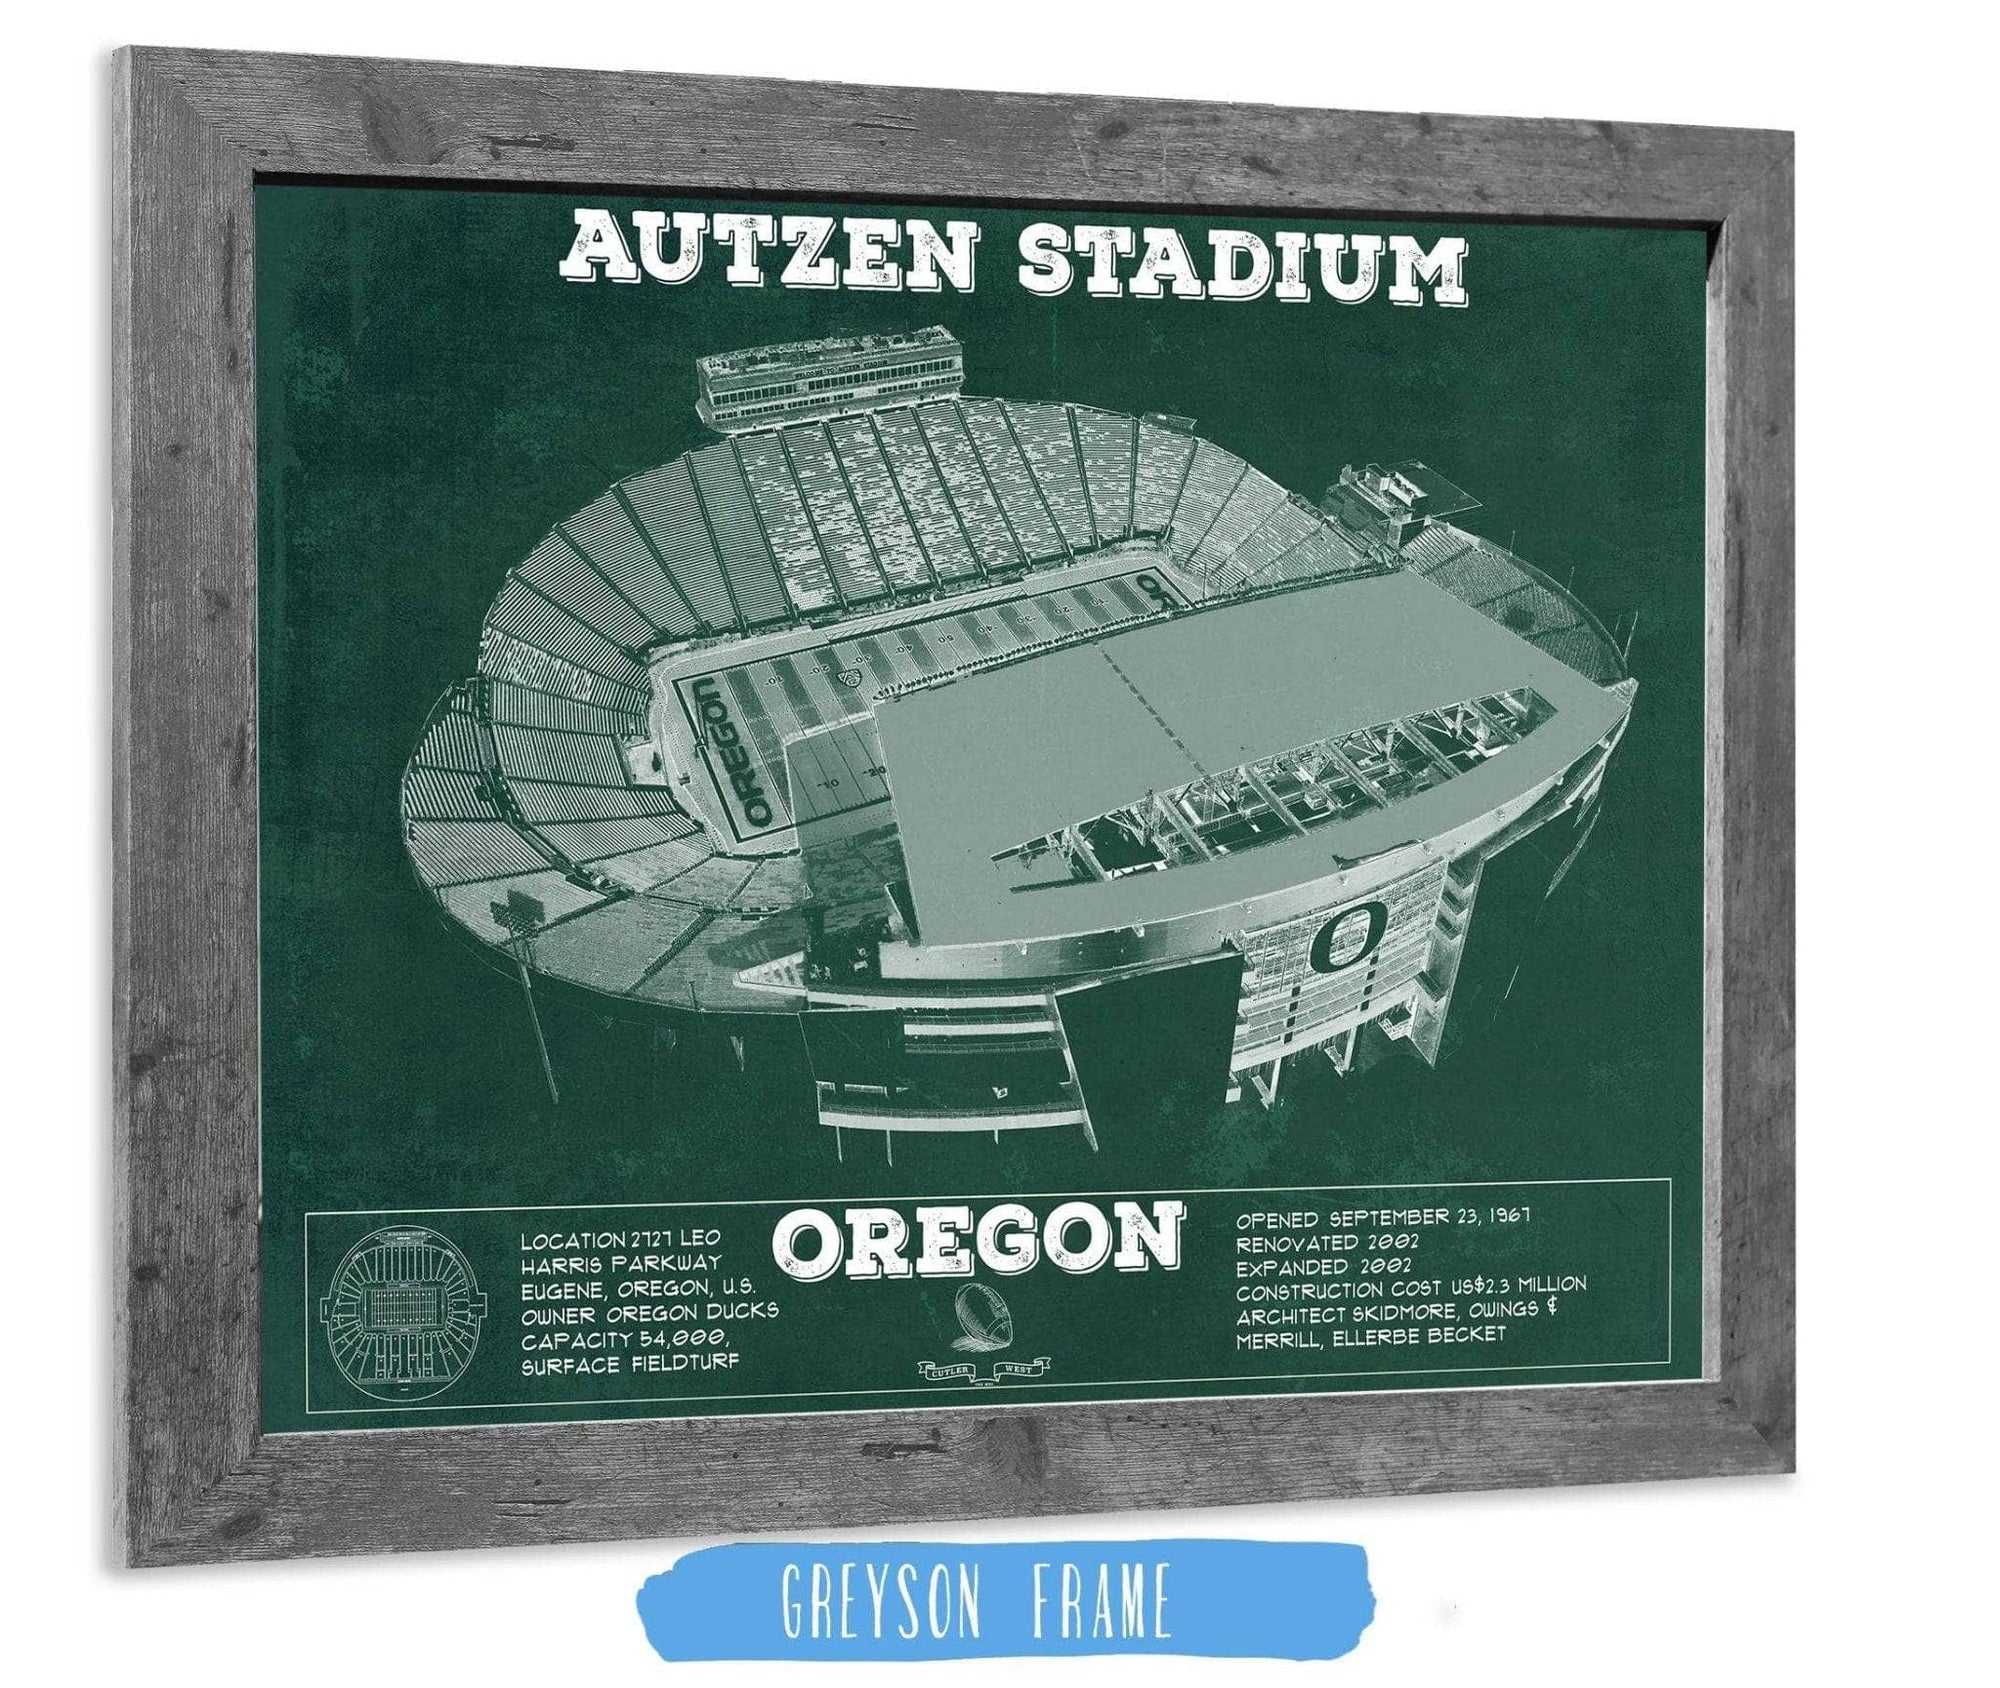 Cutler West College Football Collection 14" x 11" / Greyson Frame Vintage Autzen Stadium - Oregon Ducks Football Print 718616953-14"-x-11"35742